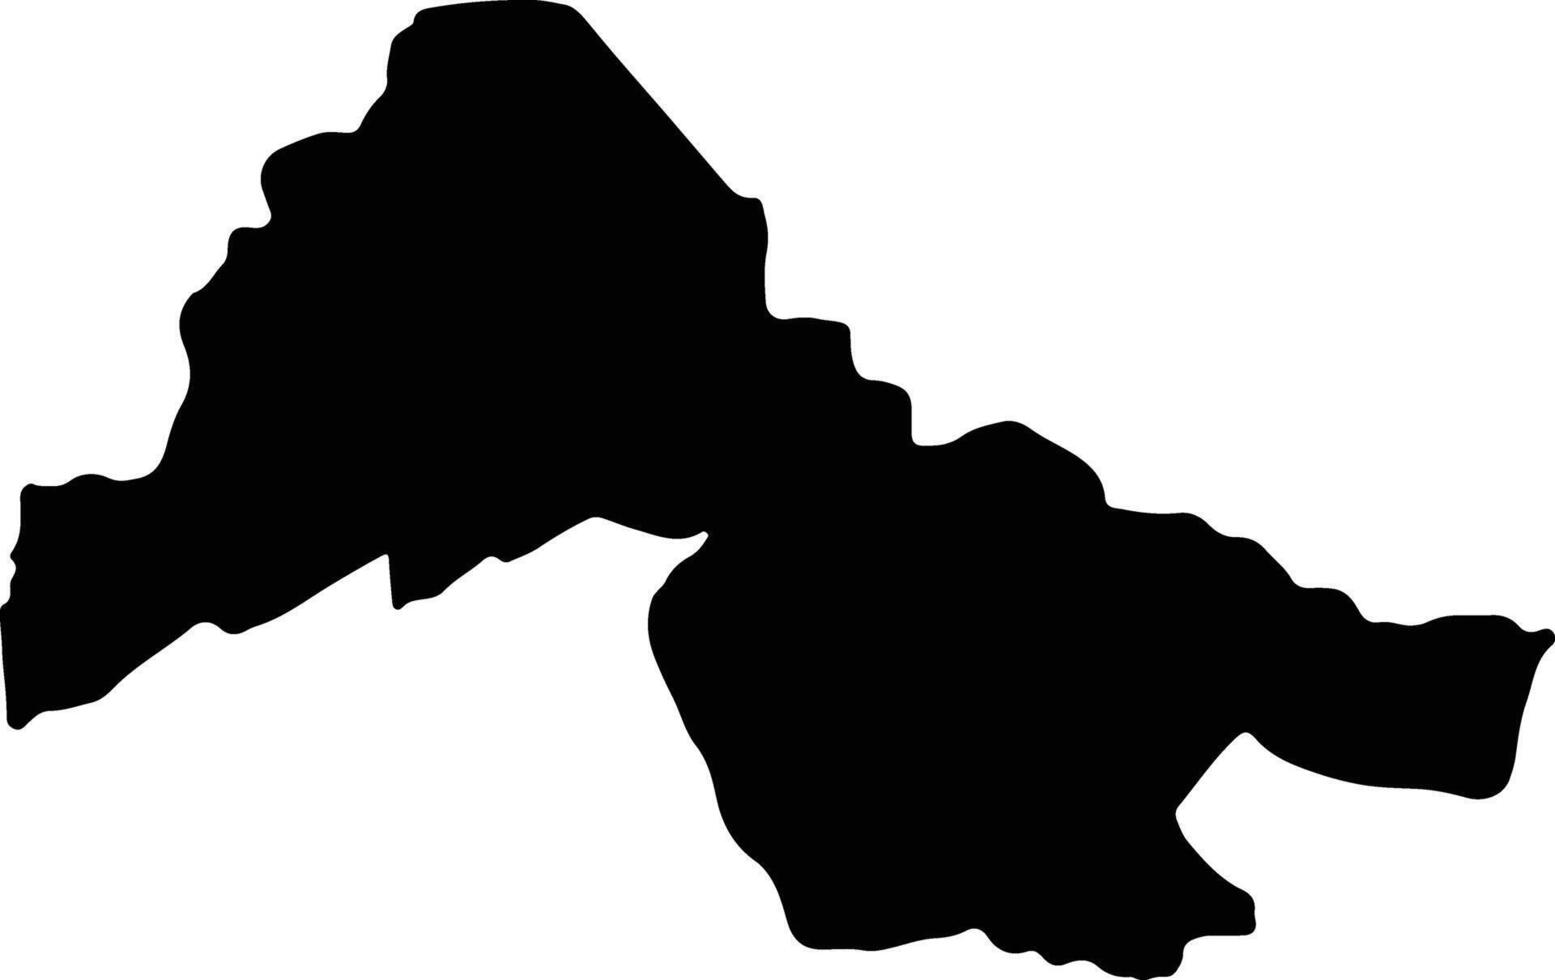 Kwara Nigeria silhouette map vector